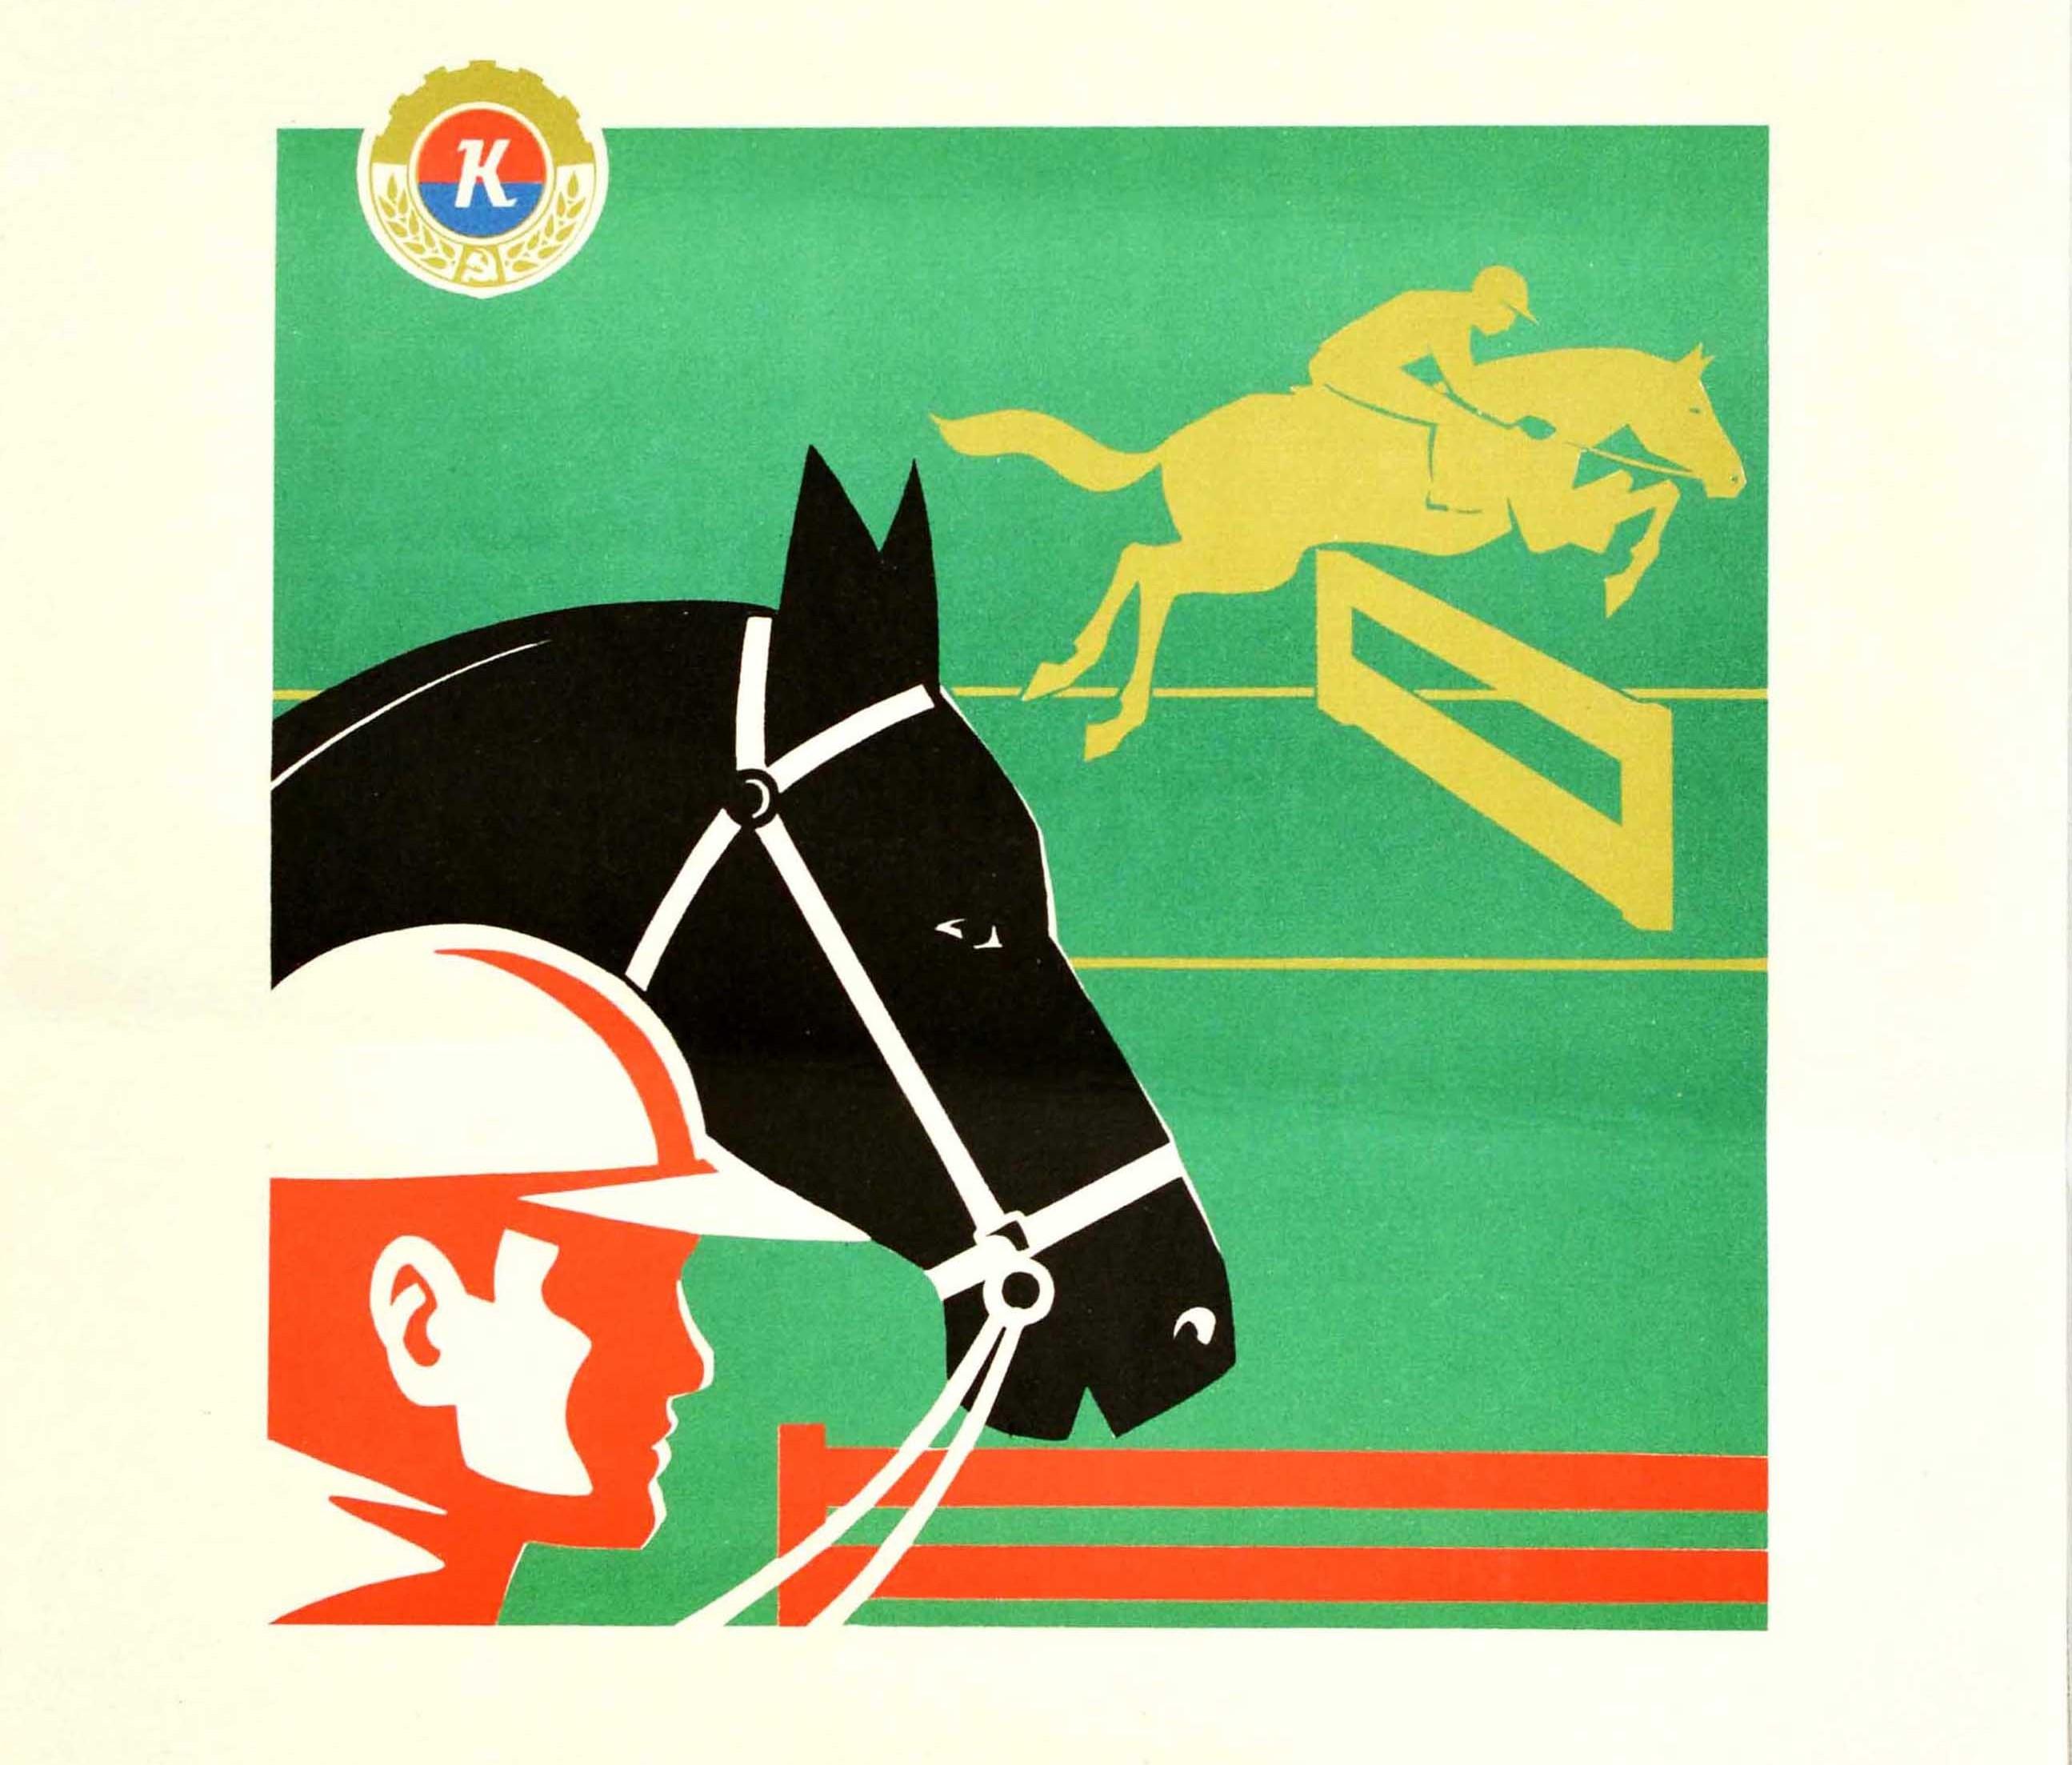 Ukrainian Original Vintage Poster Equestrian Sport USSR Horse Show Jumping Art DST Kolos